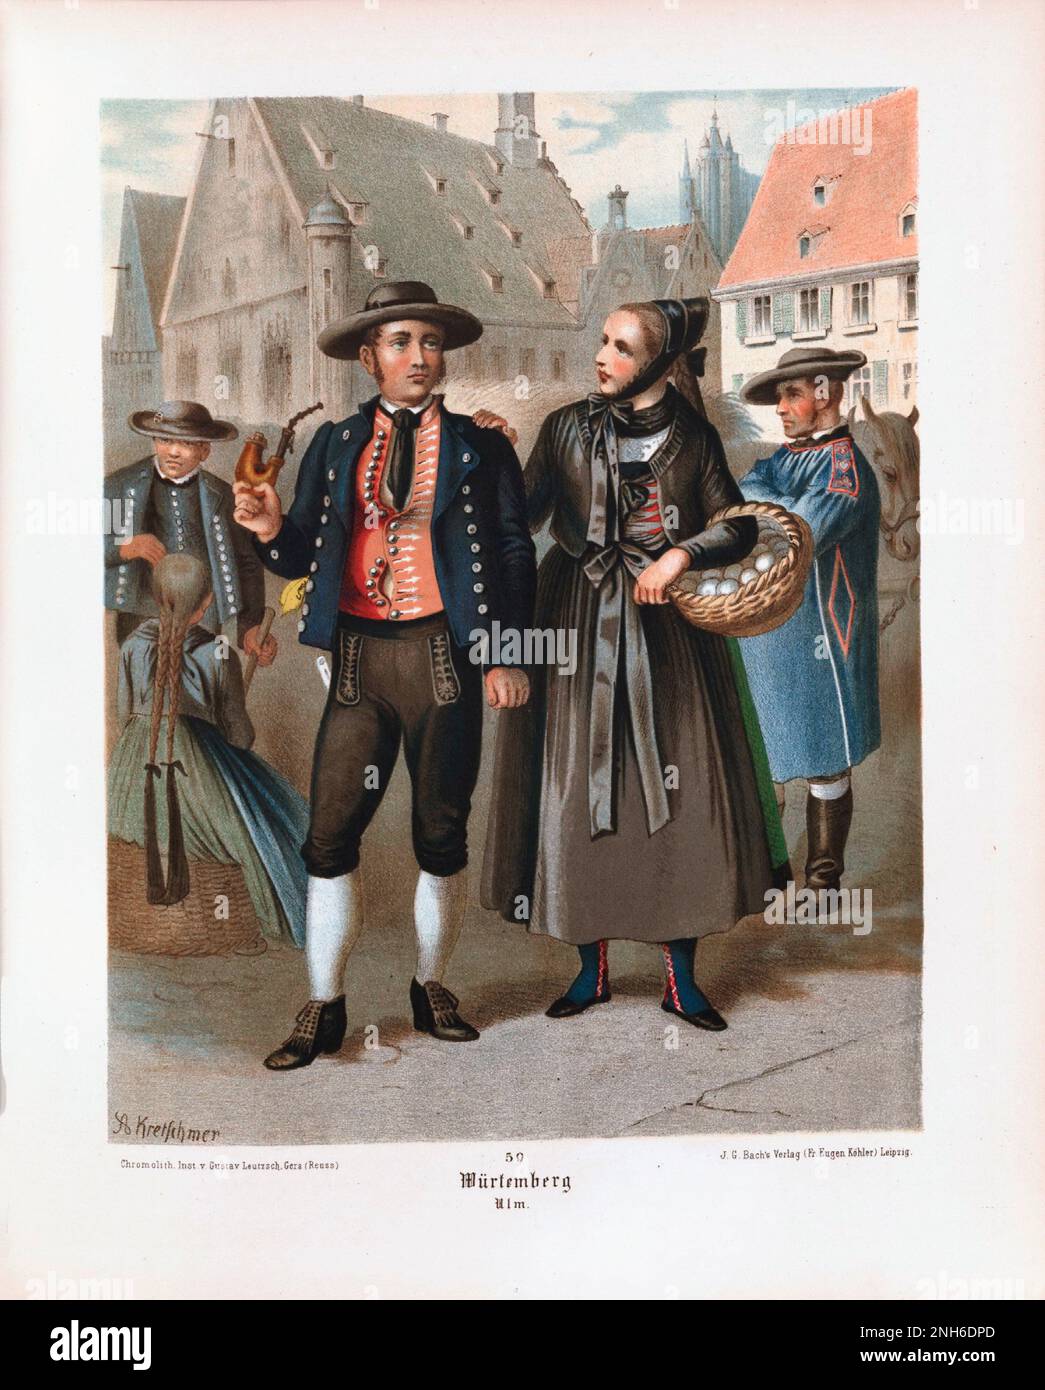 German folk costume. Württemberg, Ulm. 19th-century lithography. Stock Photo